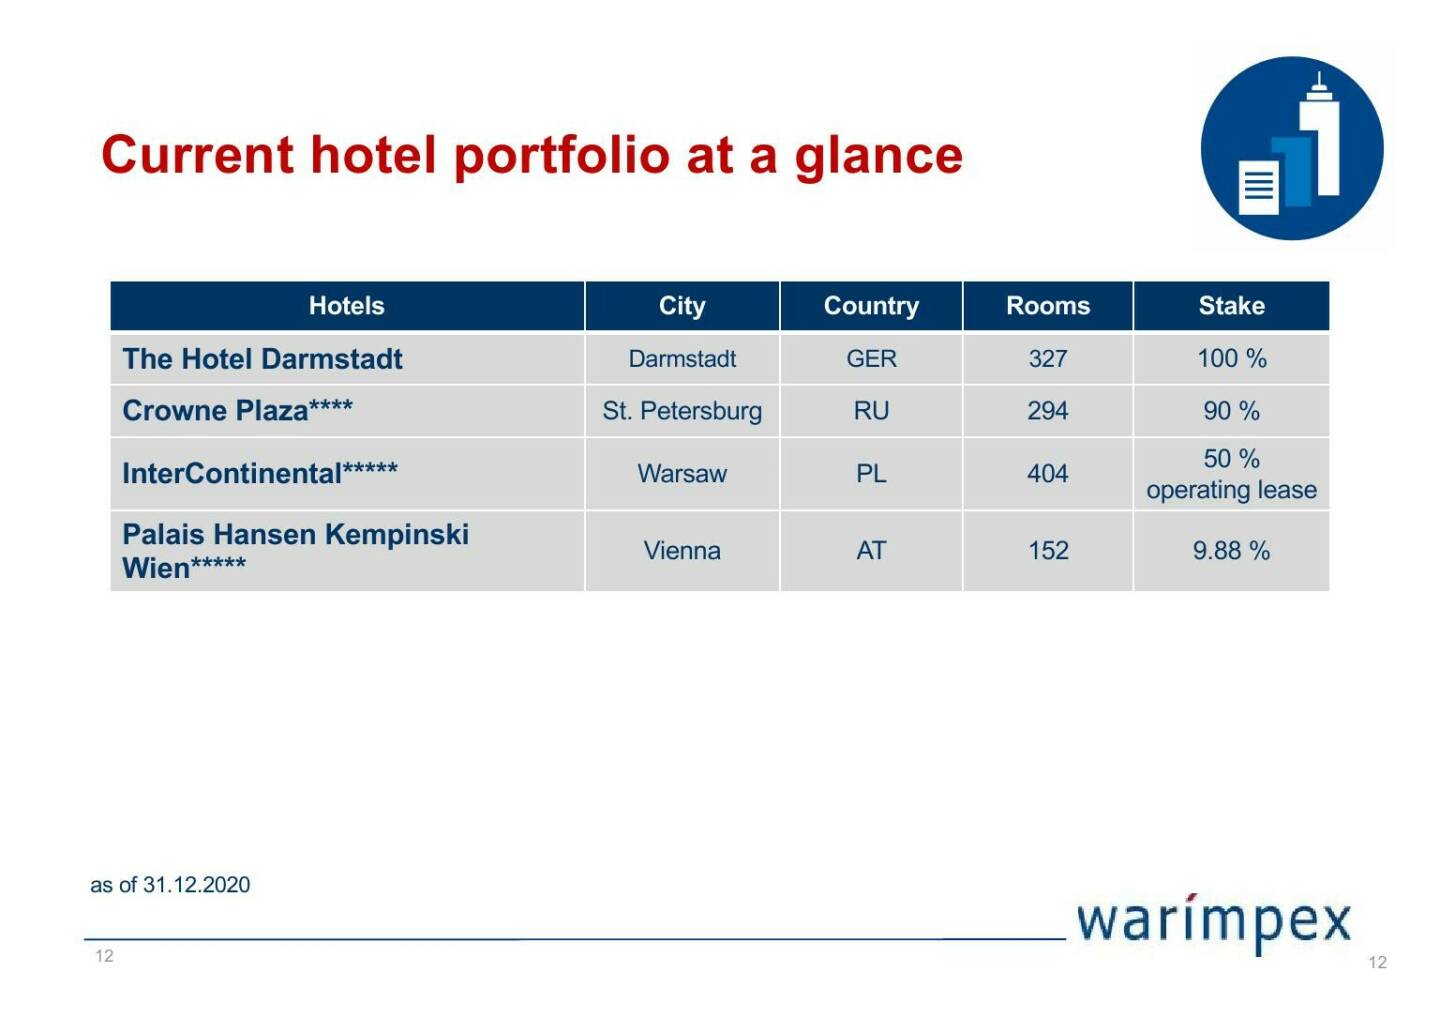 Warimpex - Current hotel portfolio at a glance